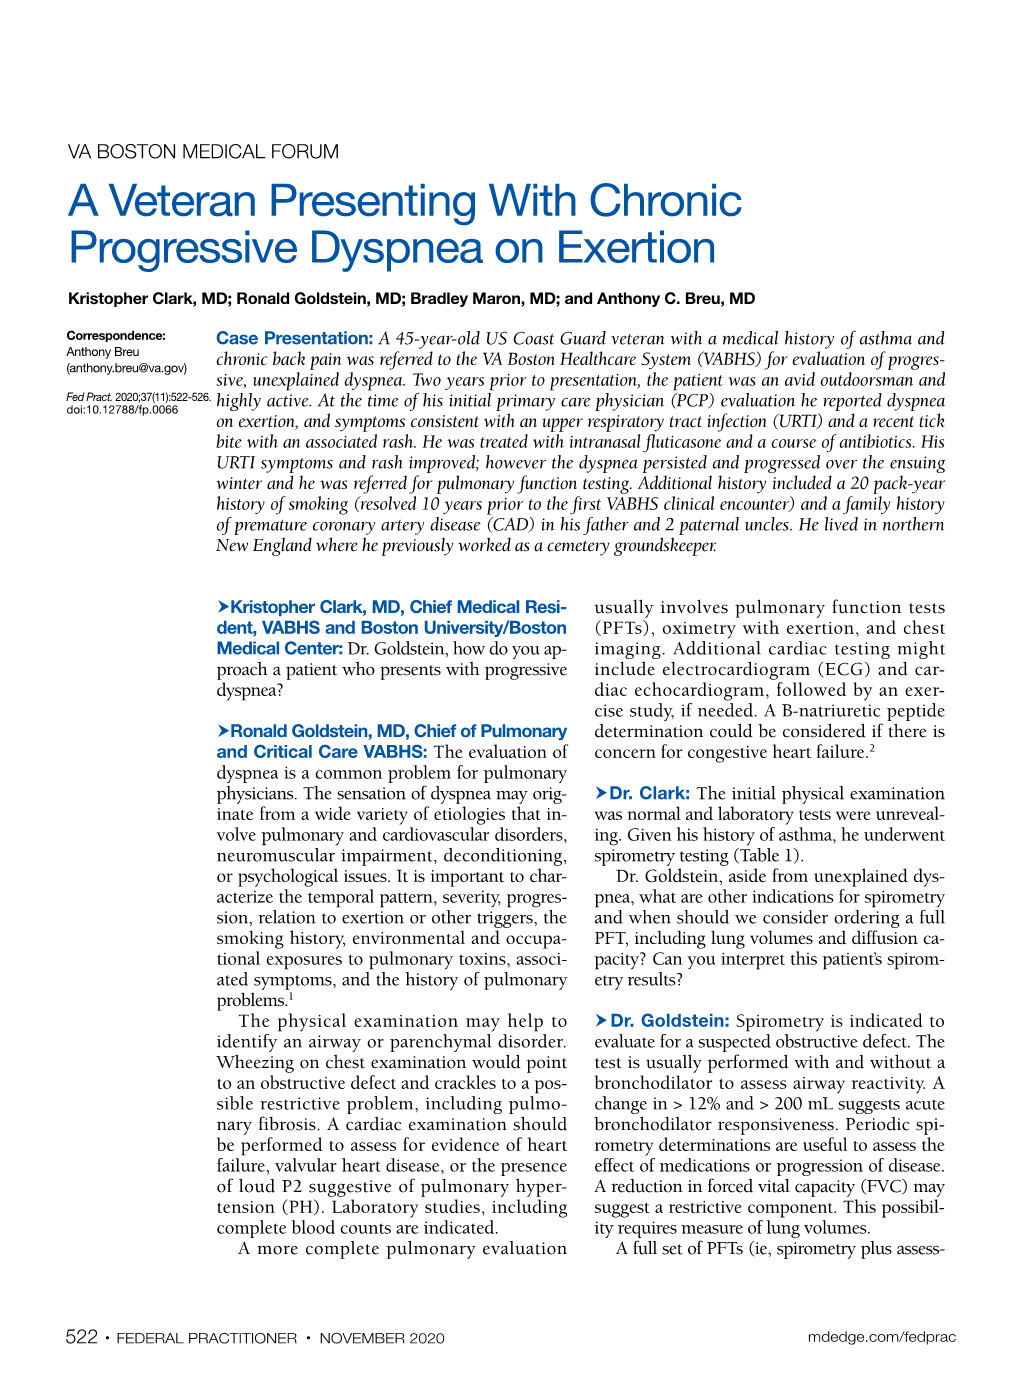 A Veteran Presenting with Chronic Progressive Dyspnea on Exertion